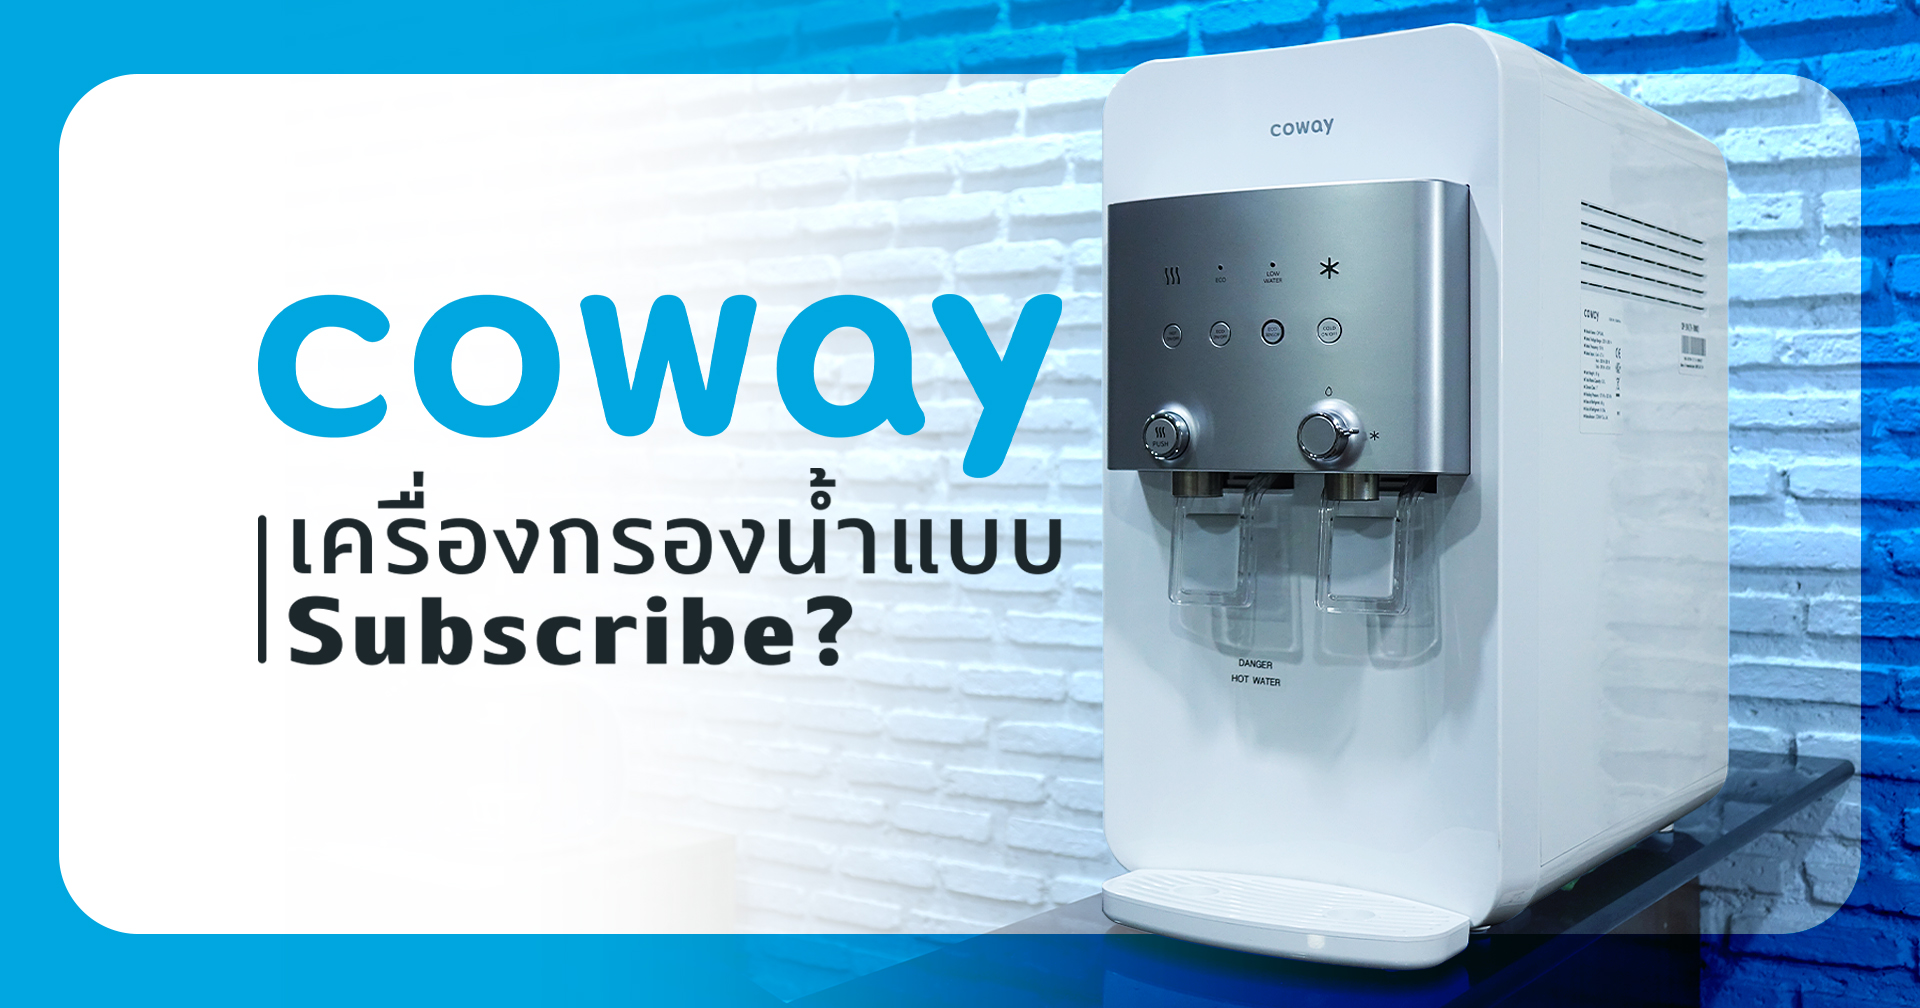 Coway ‘เครื่องกรองน้ำแบบ Subscribe’ เทรนด์ใหม่ของการดื่มน้ำ?